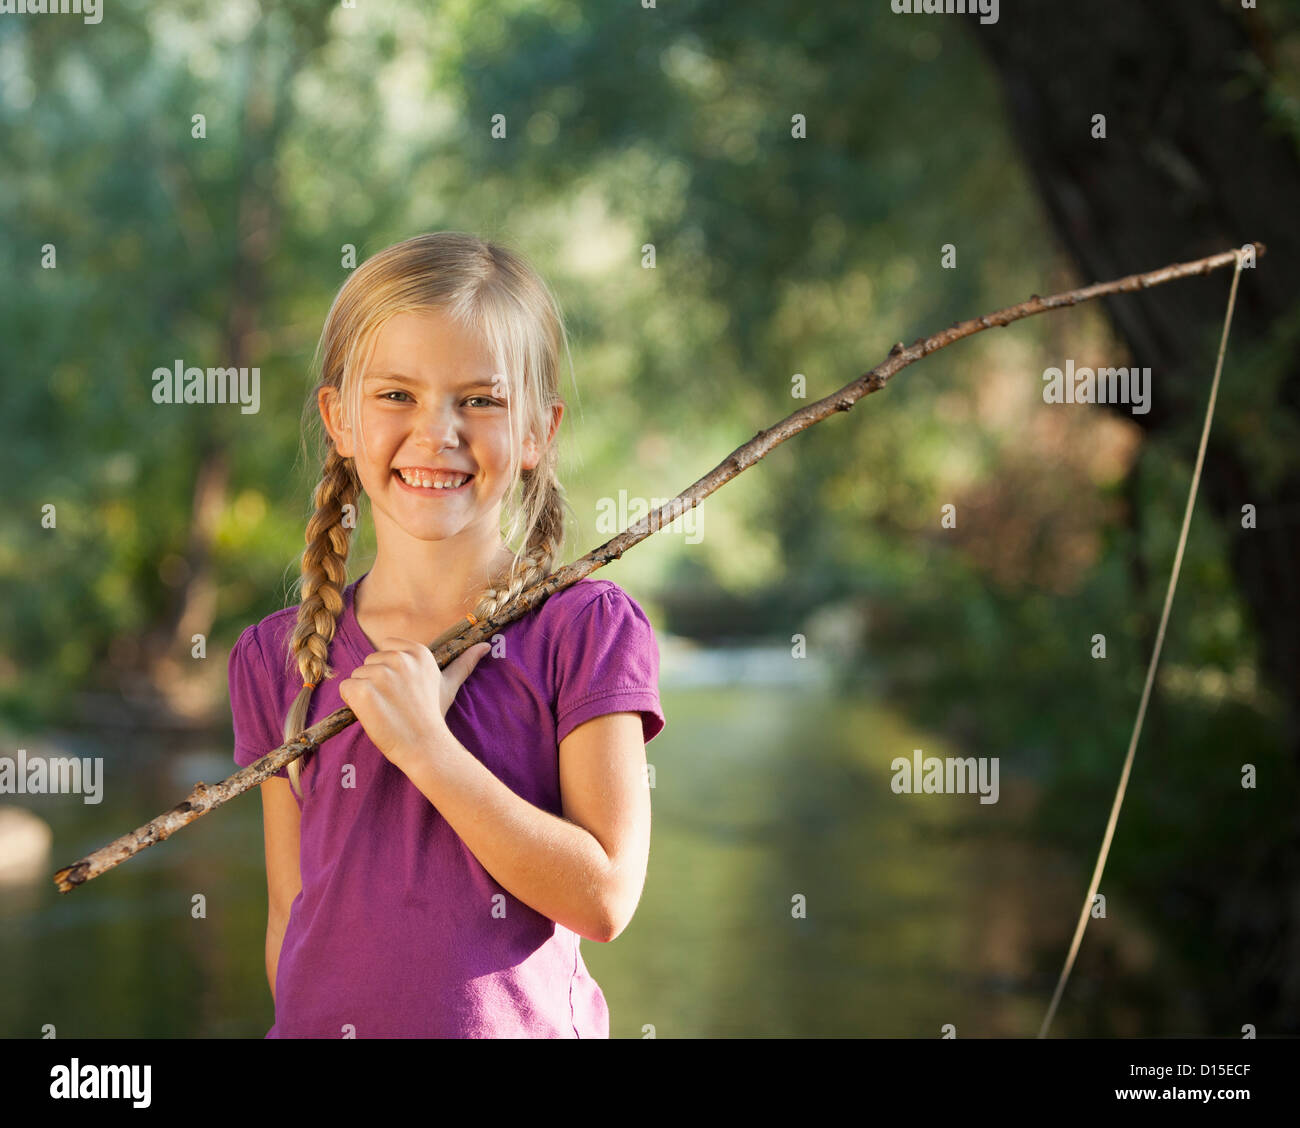 USA, Utah, Lehi, Little girl (4-5) holding wooden stick fishing pole Stock  Photo - Alamy